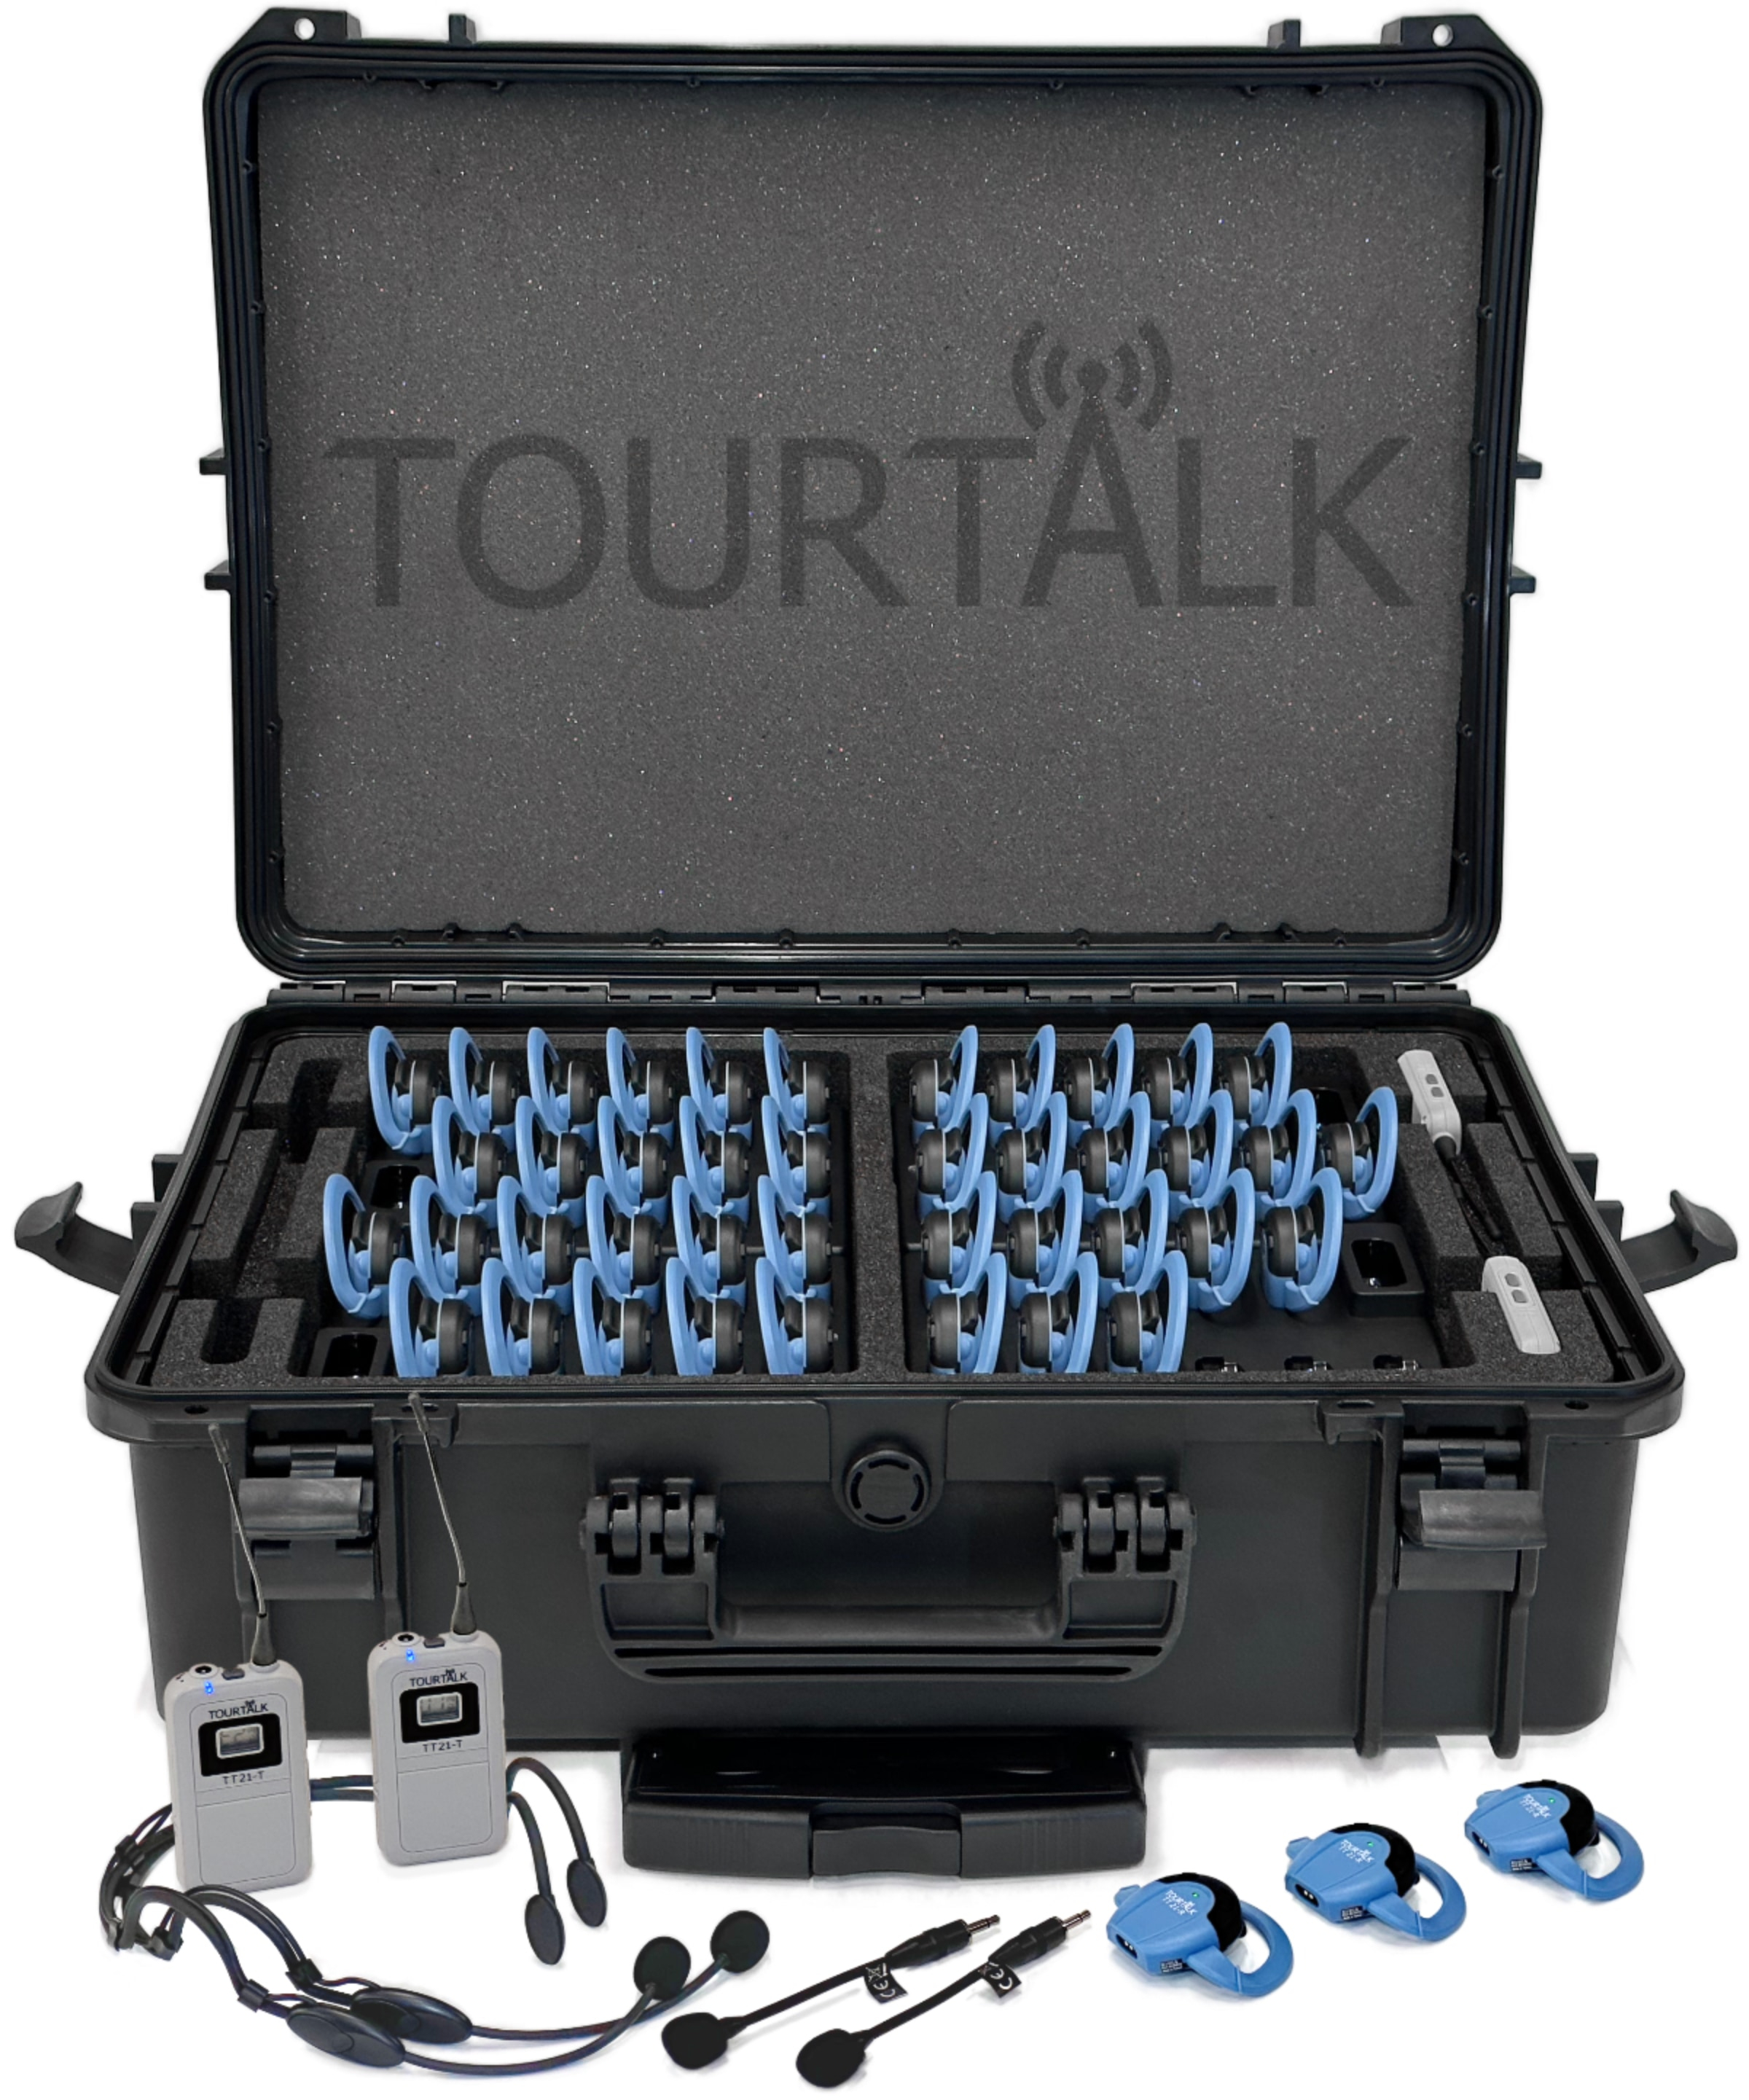 Tourtalk TT 21 one-way tour guide system